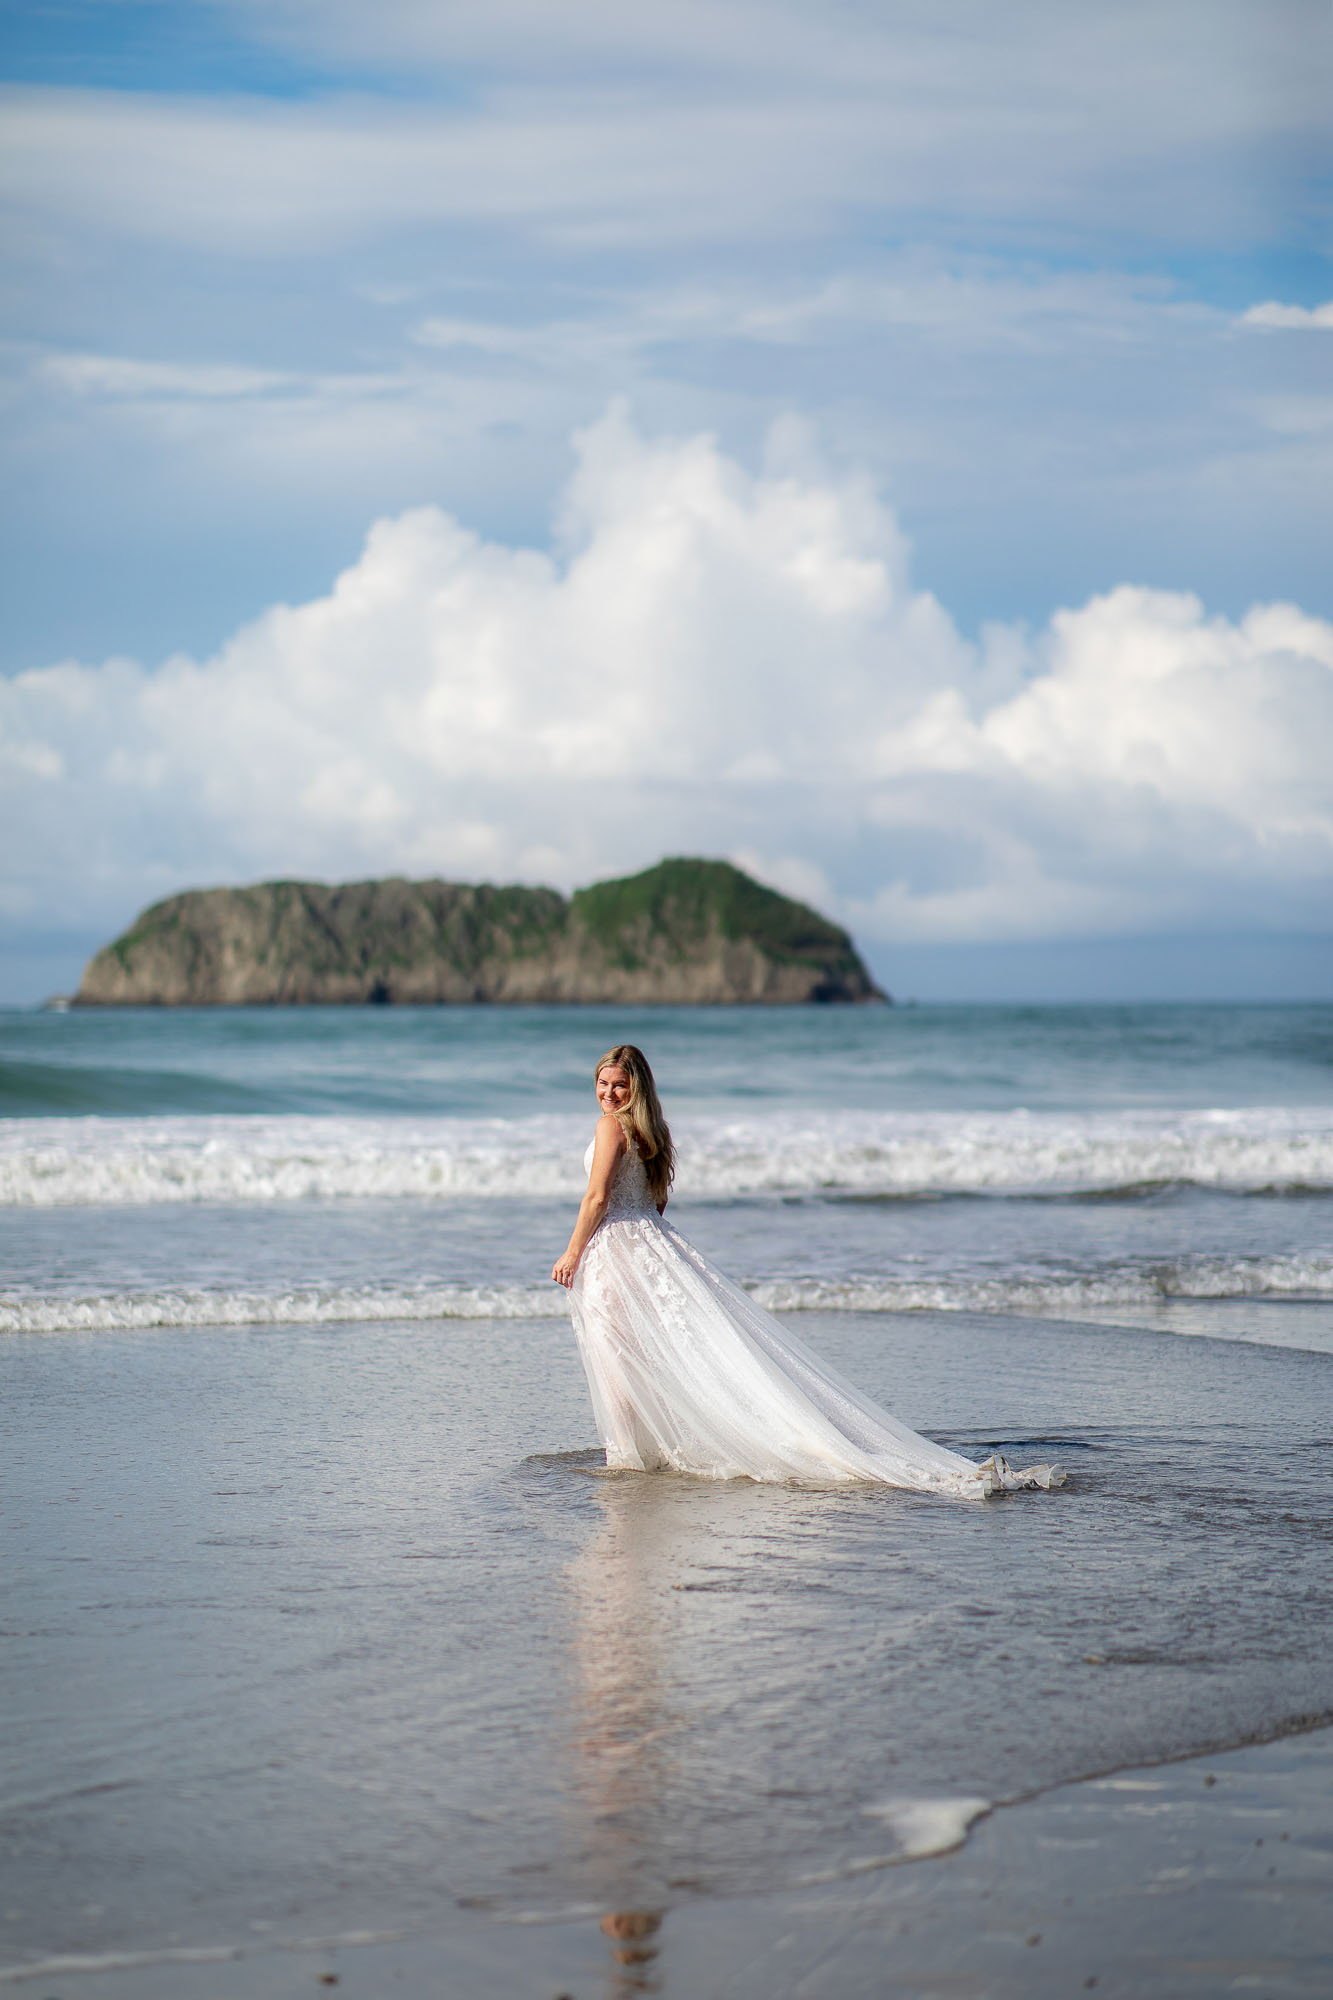 The bride on the beach 